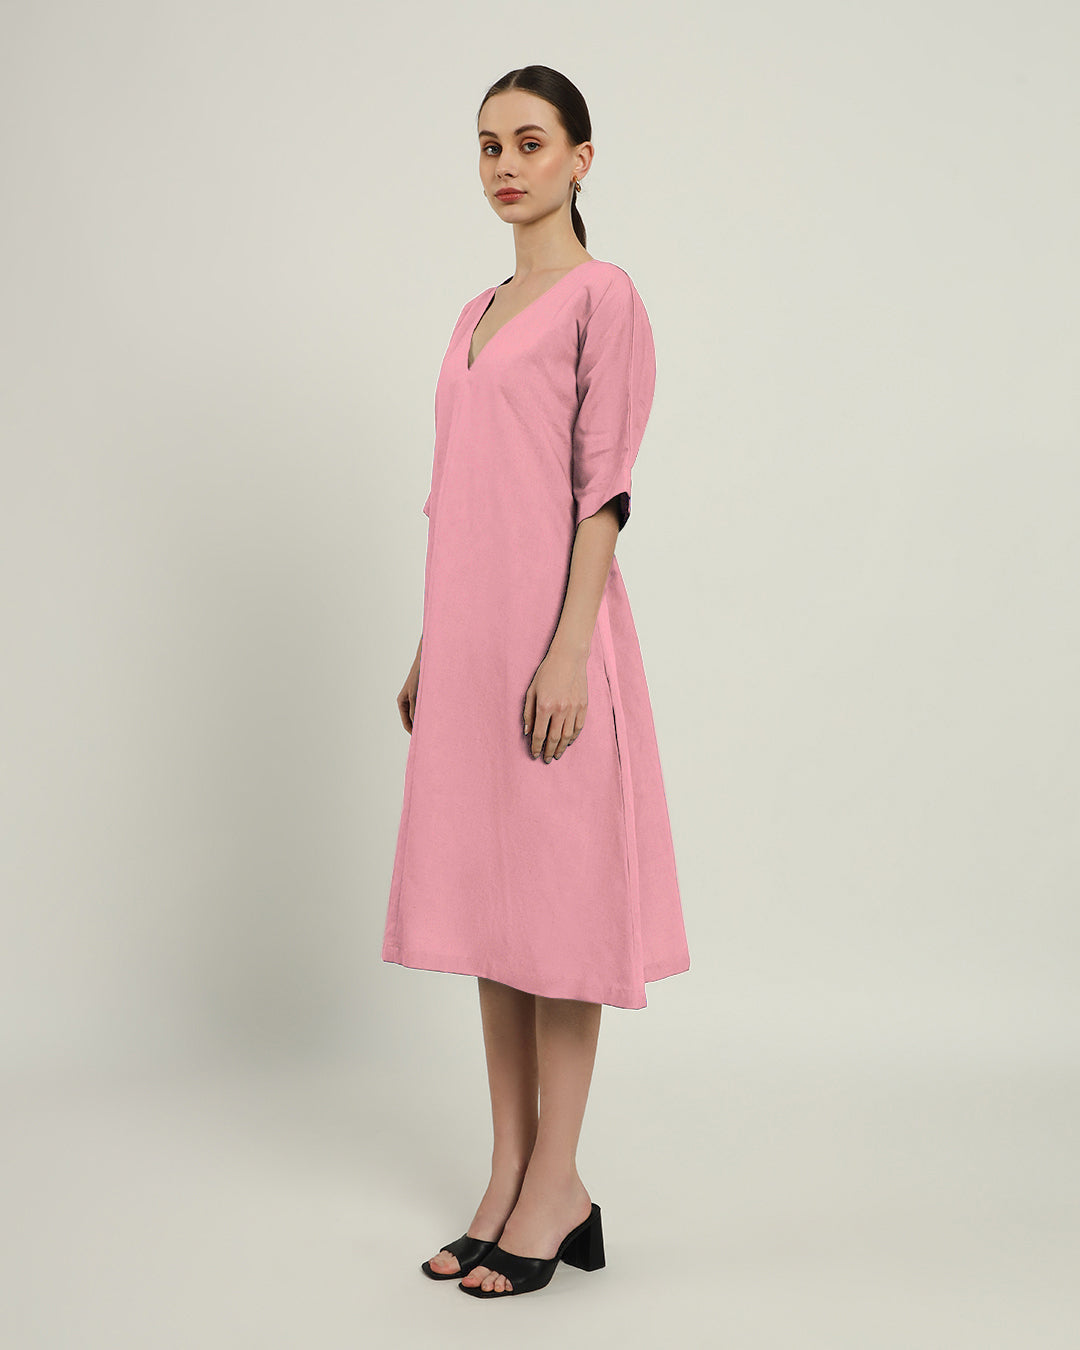 The Mildura Fondant Pink Dress